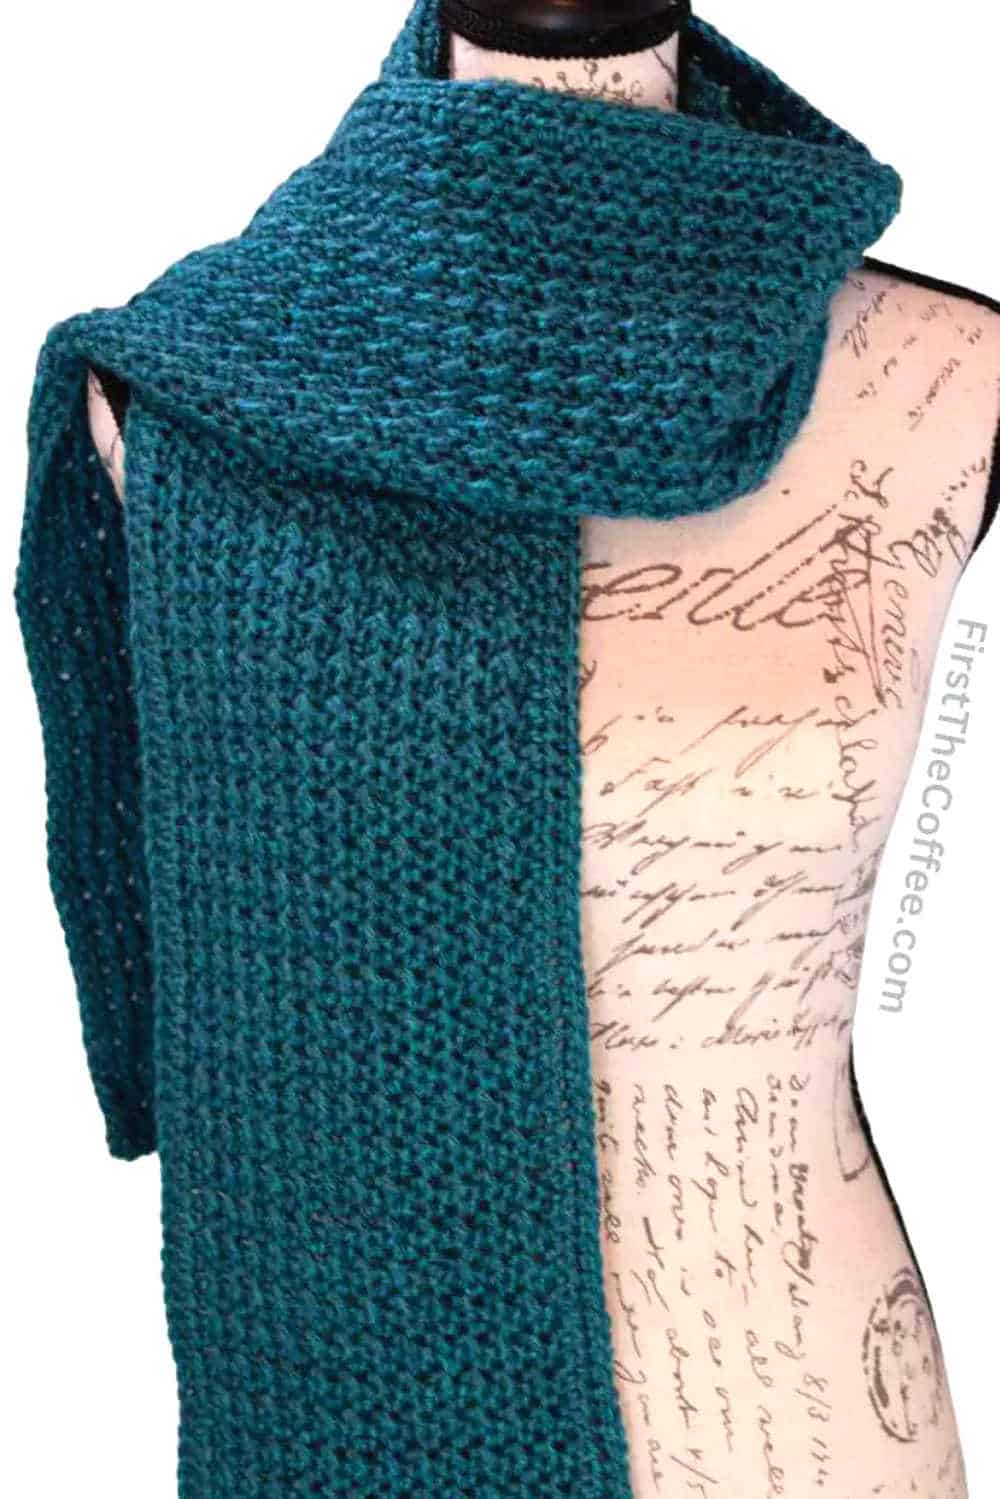 Crocheted dark green scarf.